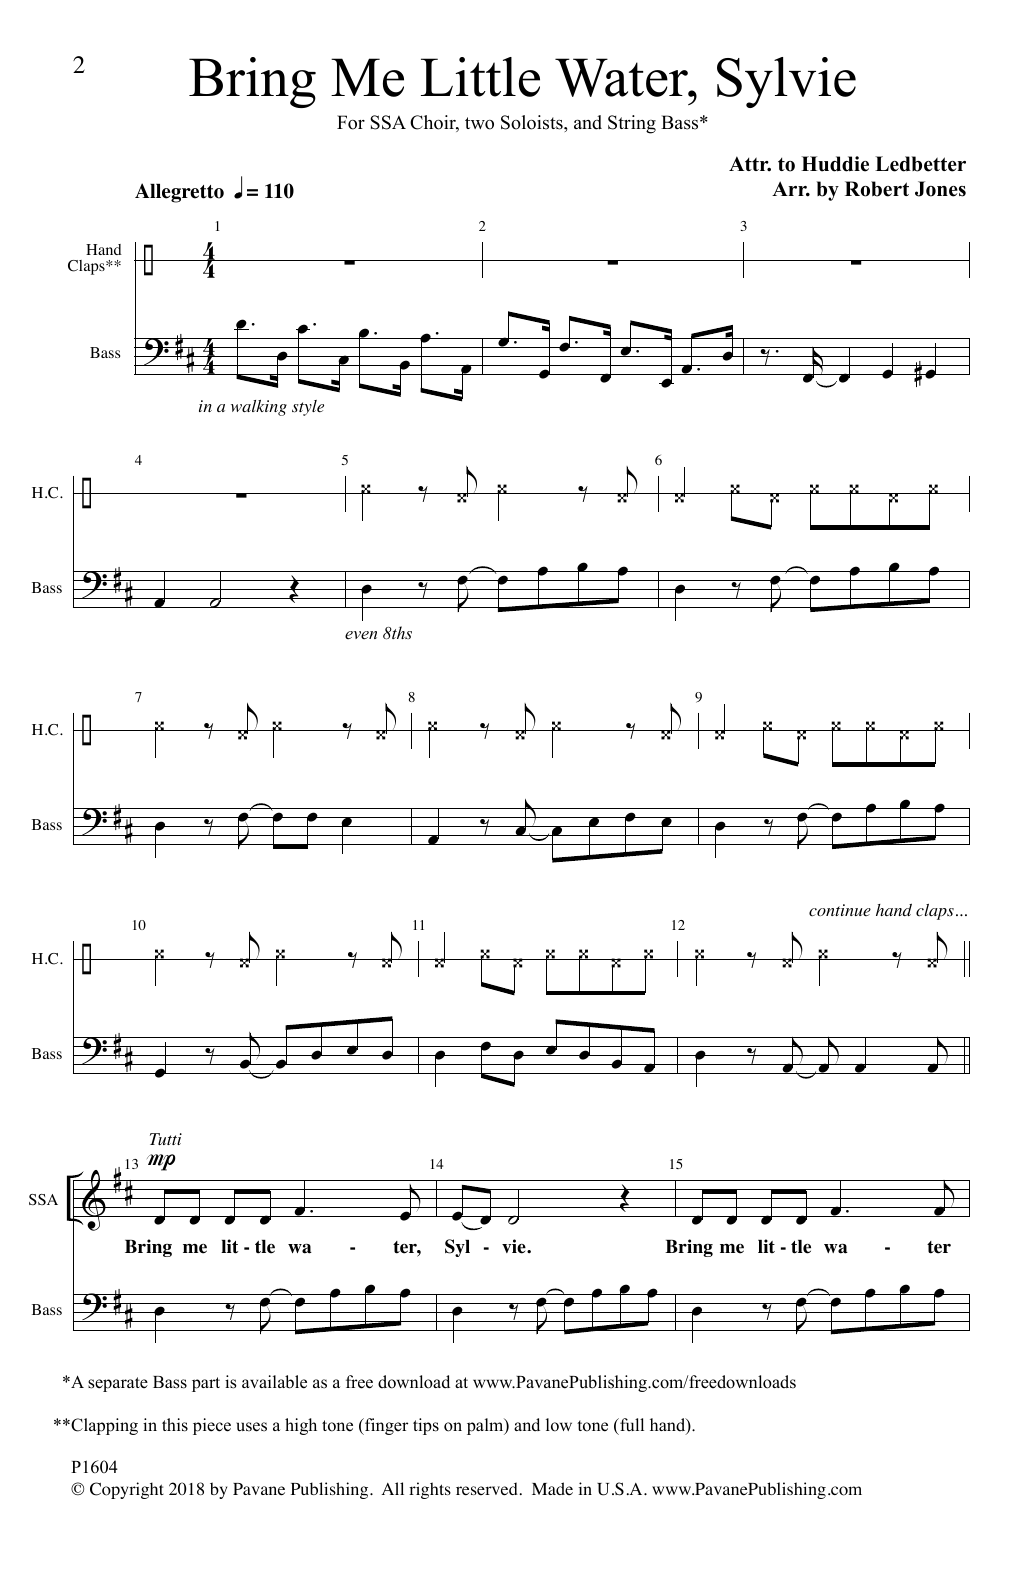 Huddie Ledbetter Bring Me Little Water Sylvie Sheet Music Notes & Chords for SSA Choir - Download or Print PDF